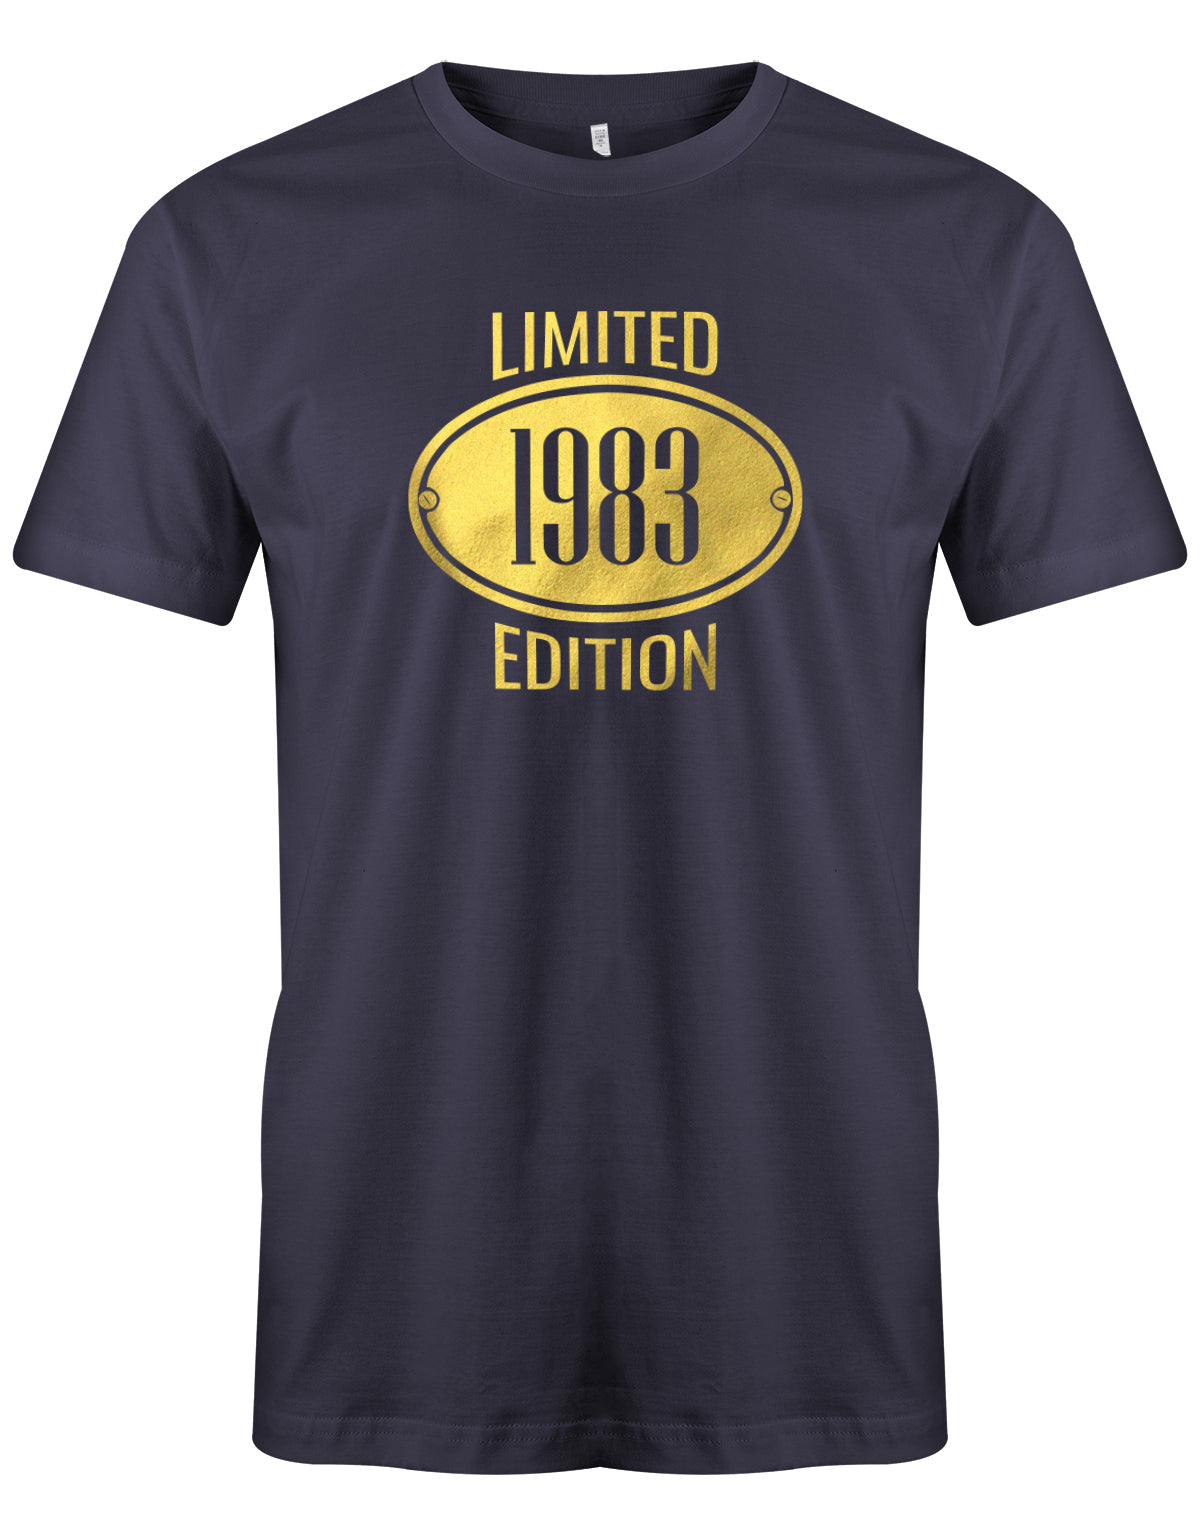 Limited Edition Gold 1983 - T-Shirt 40 Geburtstag Männer myShirtStore Navy